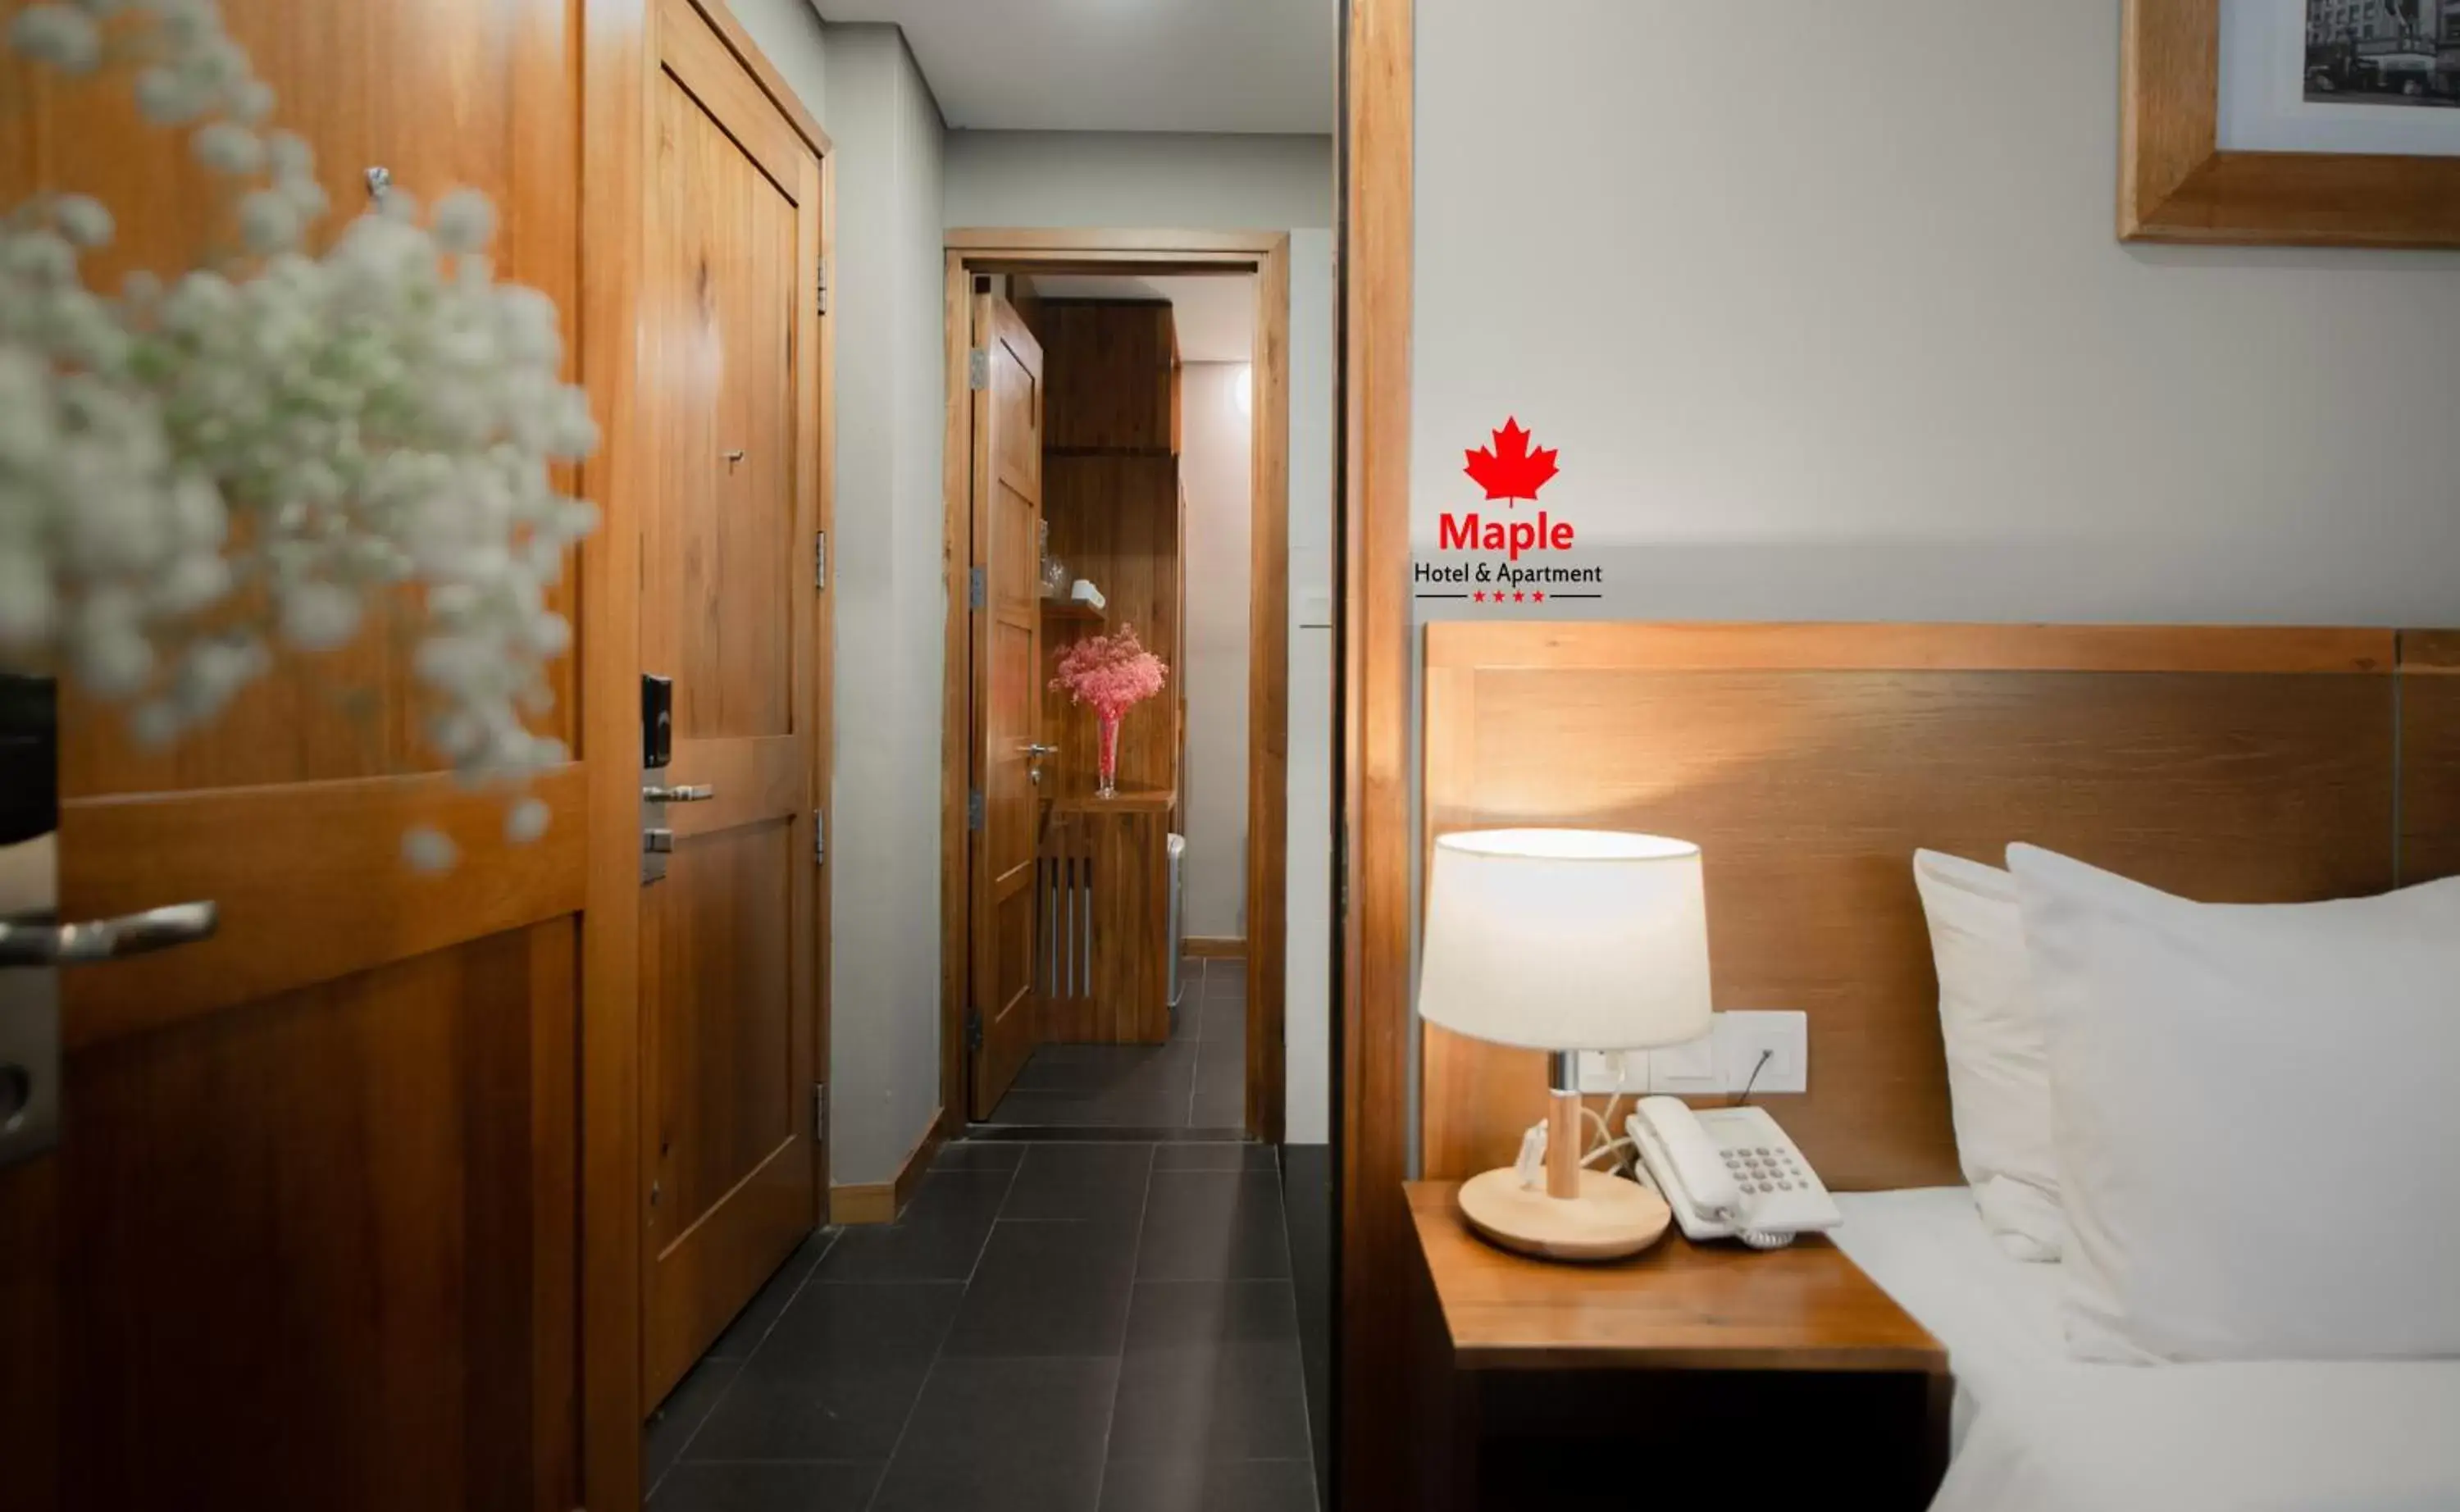 Bedroom, Bathroom in Maple Hotel & Apartment